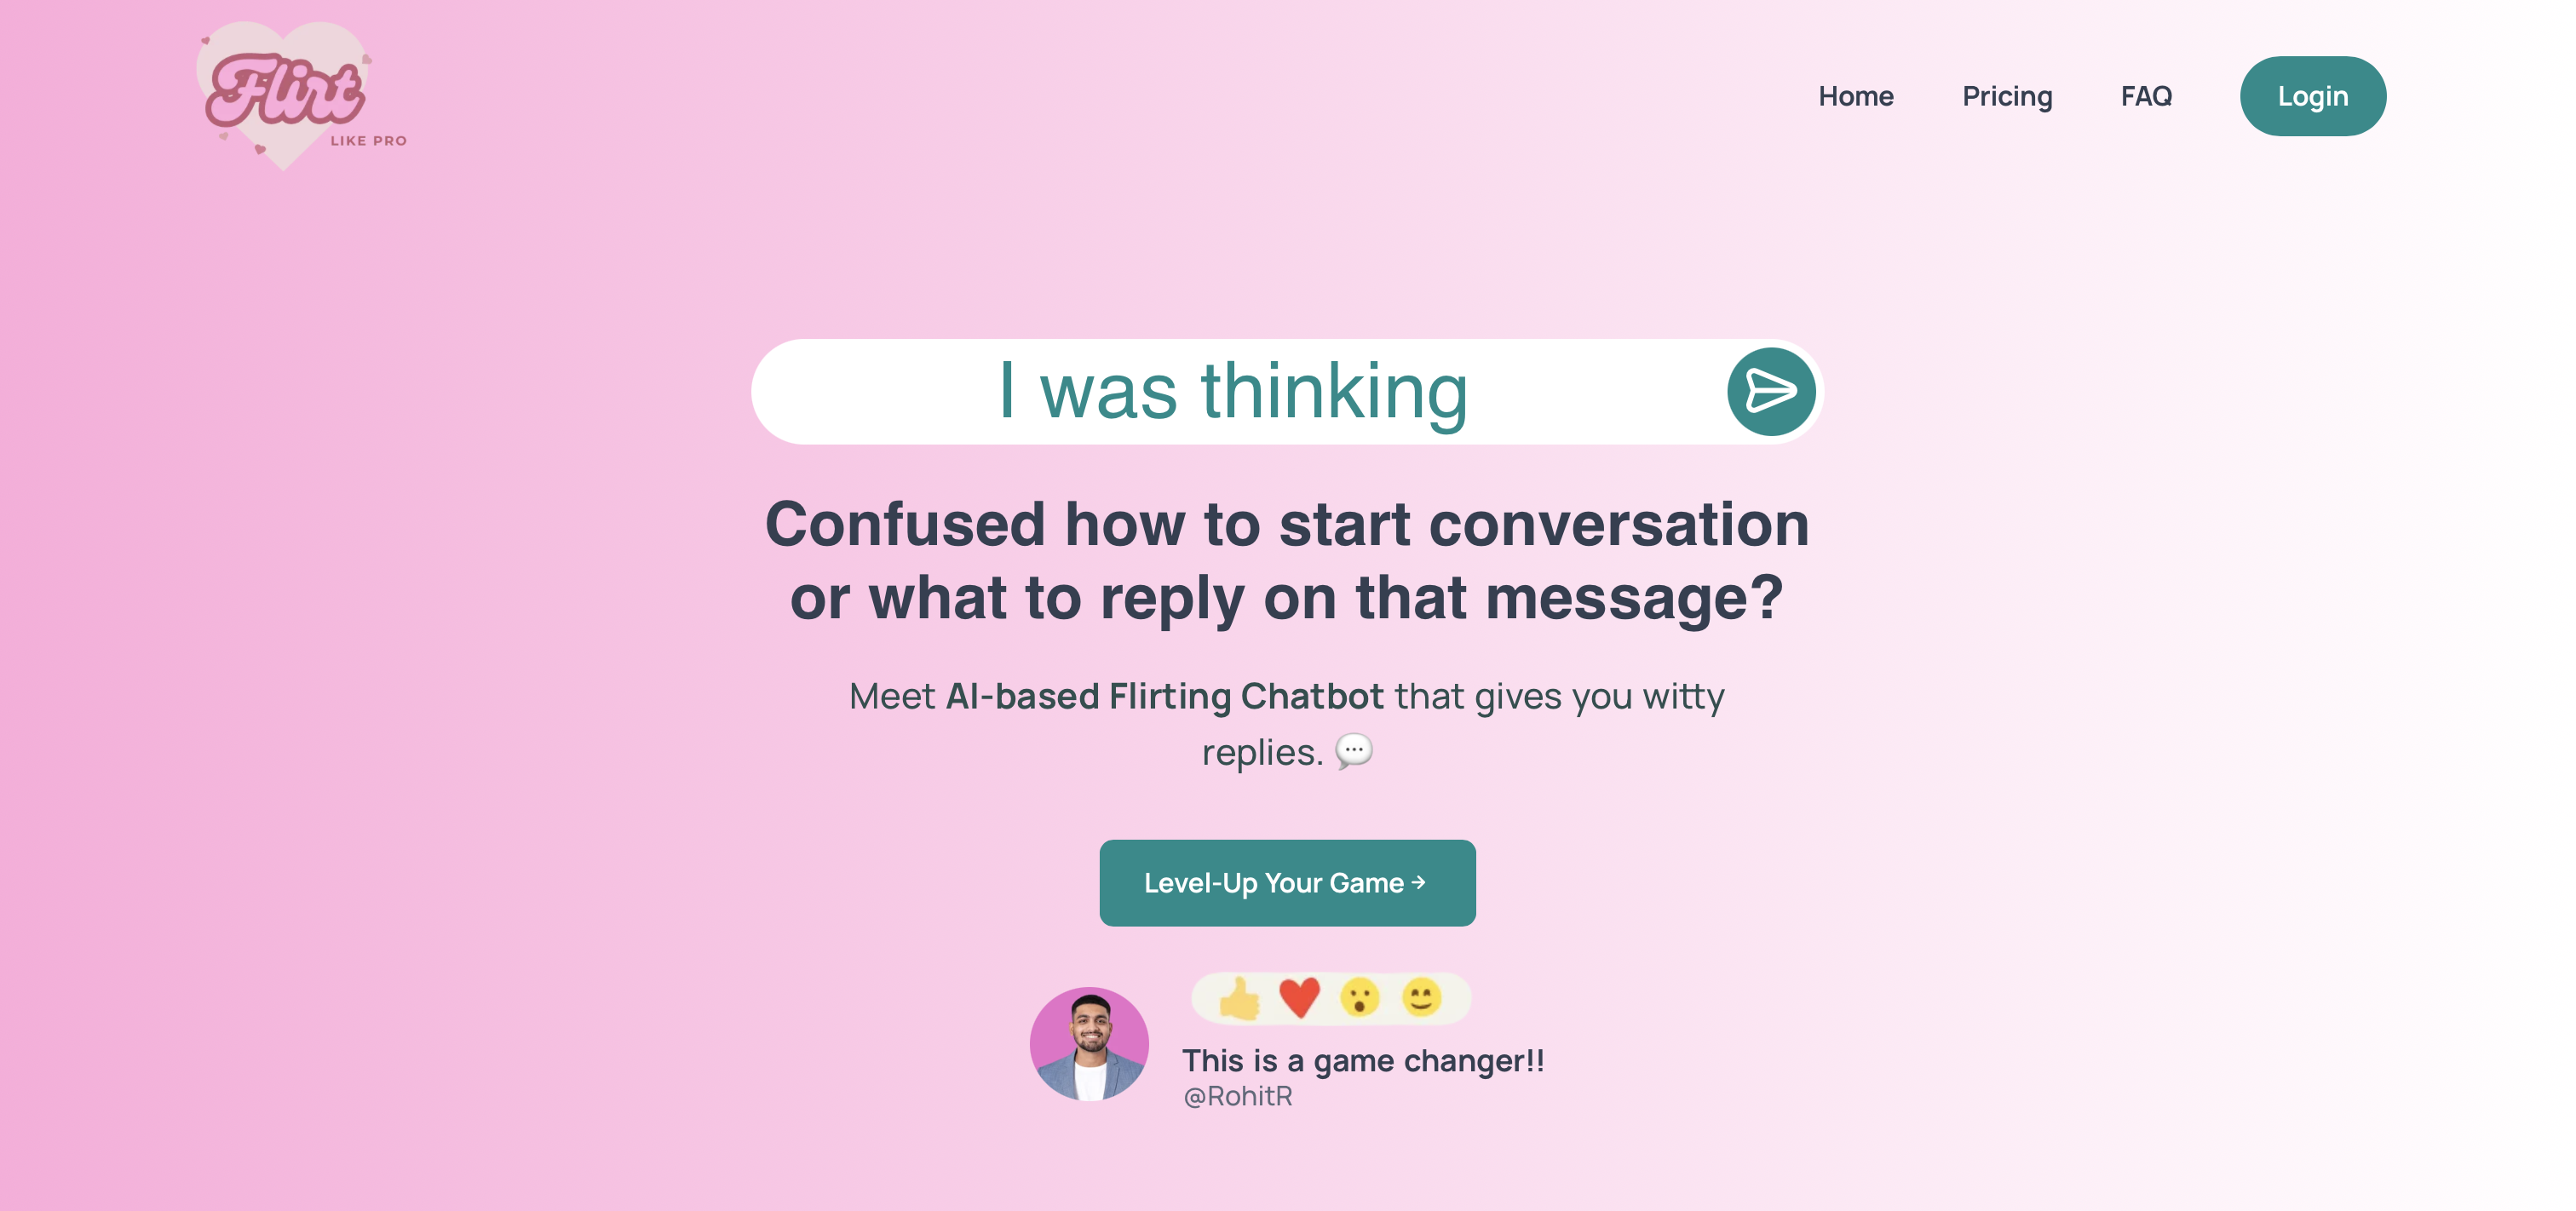 flirt-like-pro - AI-based flirting chatbot that gives you witty replies